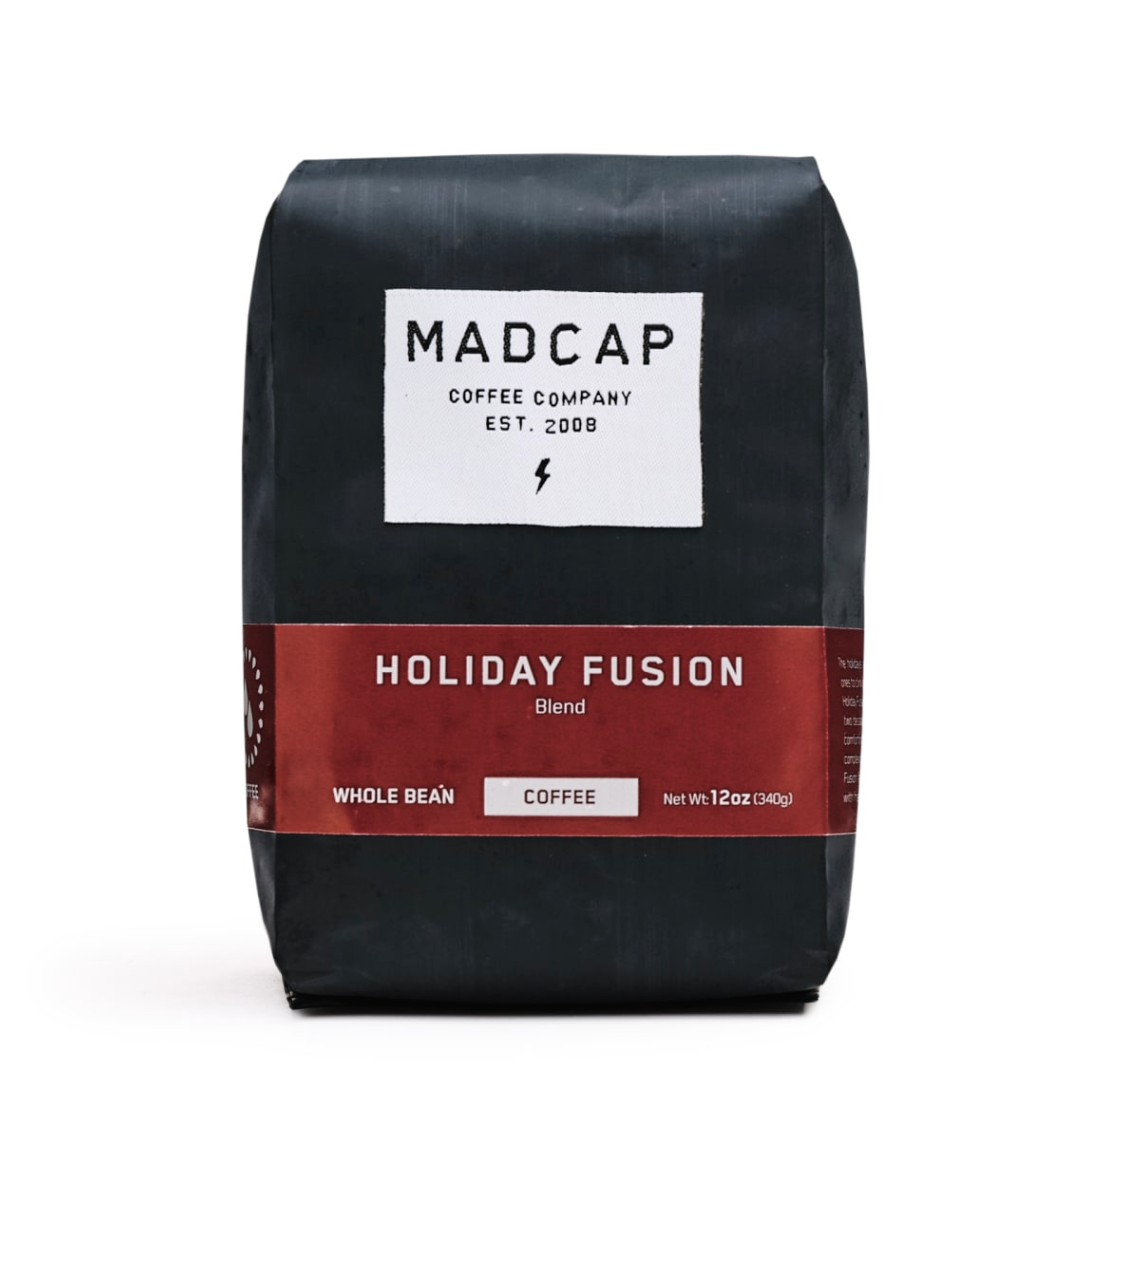 Madcap holiday fusion